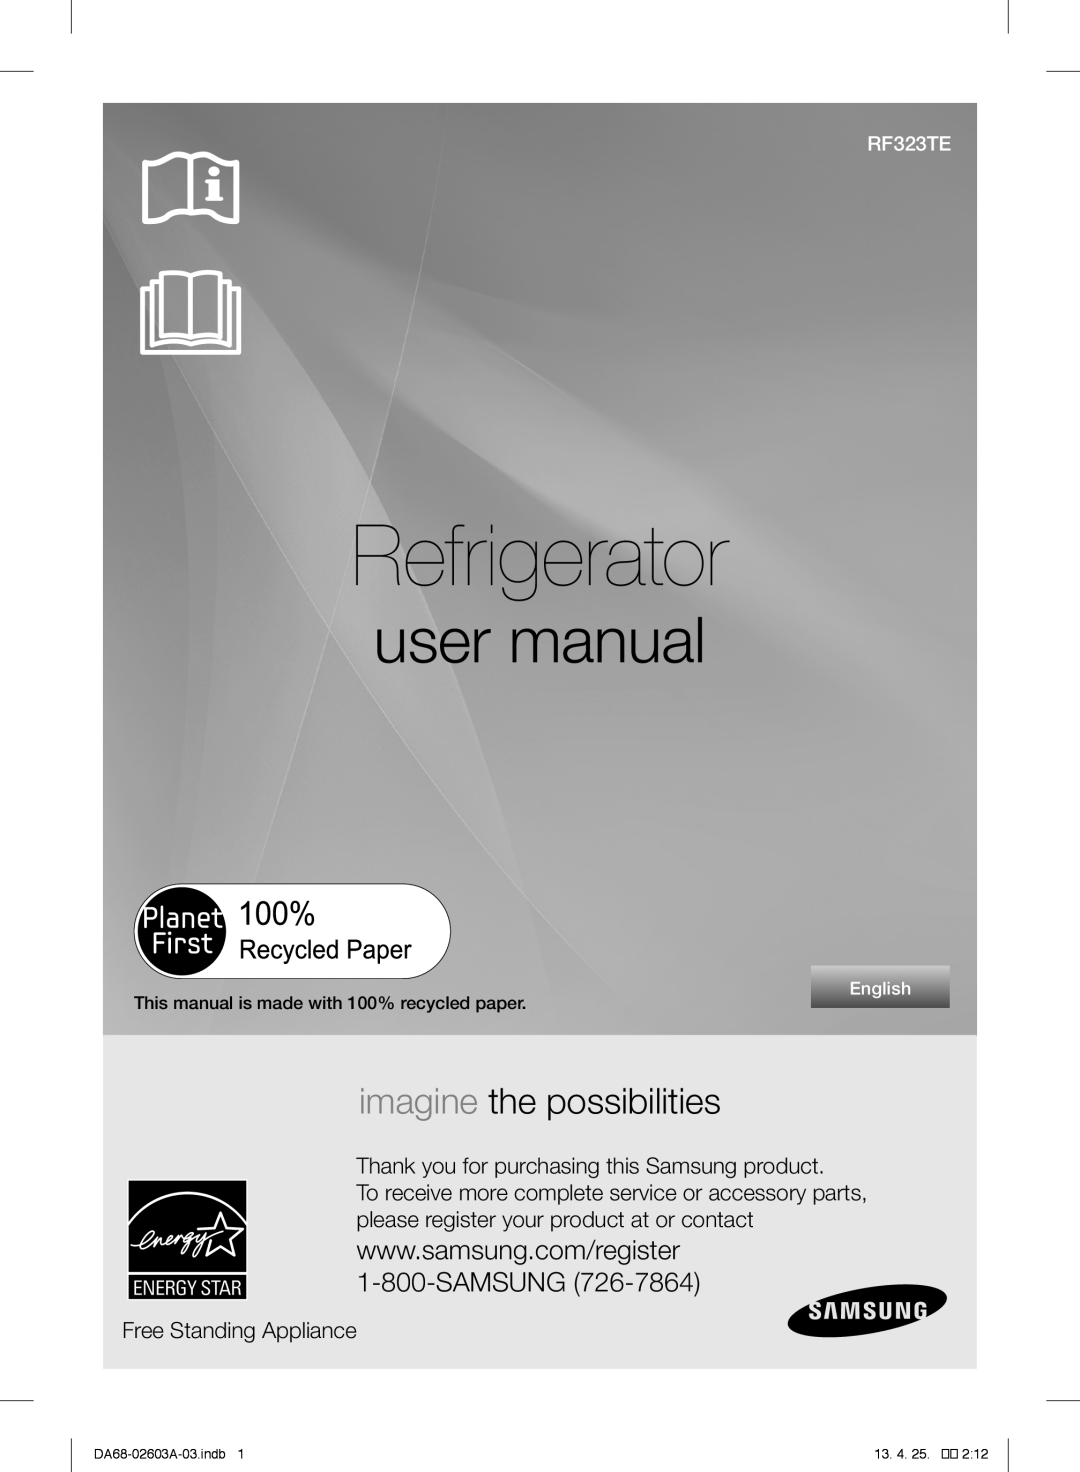 Samsung RF323TEDBSR user manual Refrigerator, imagine the possibilities, Samsung, Free Standing Appliance, English 